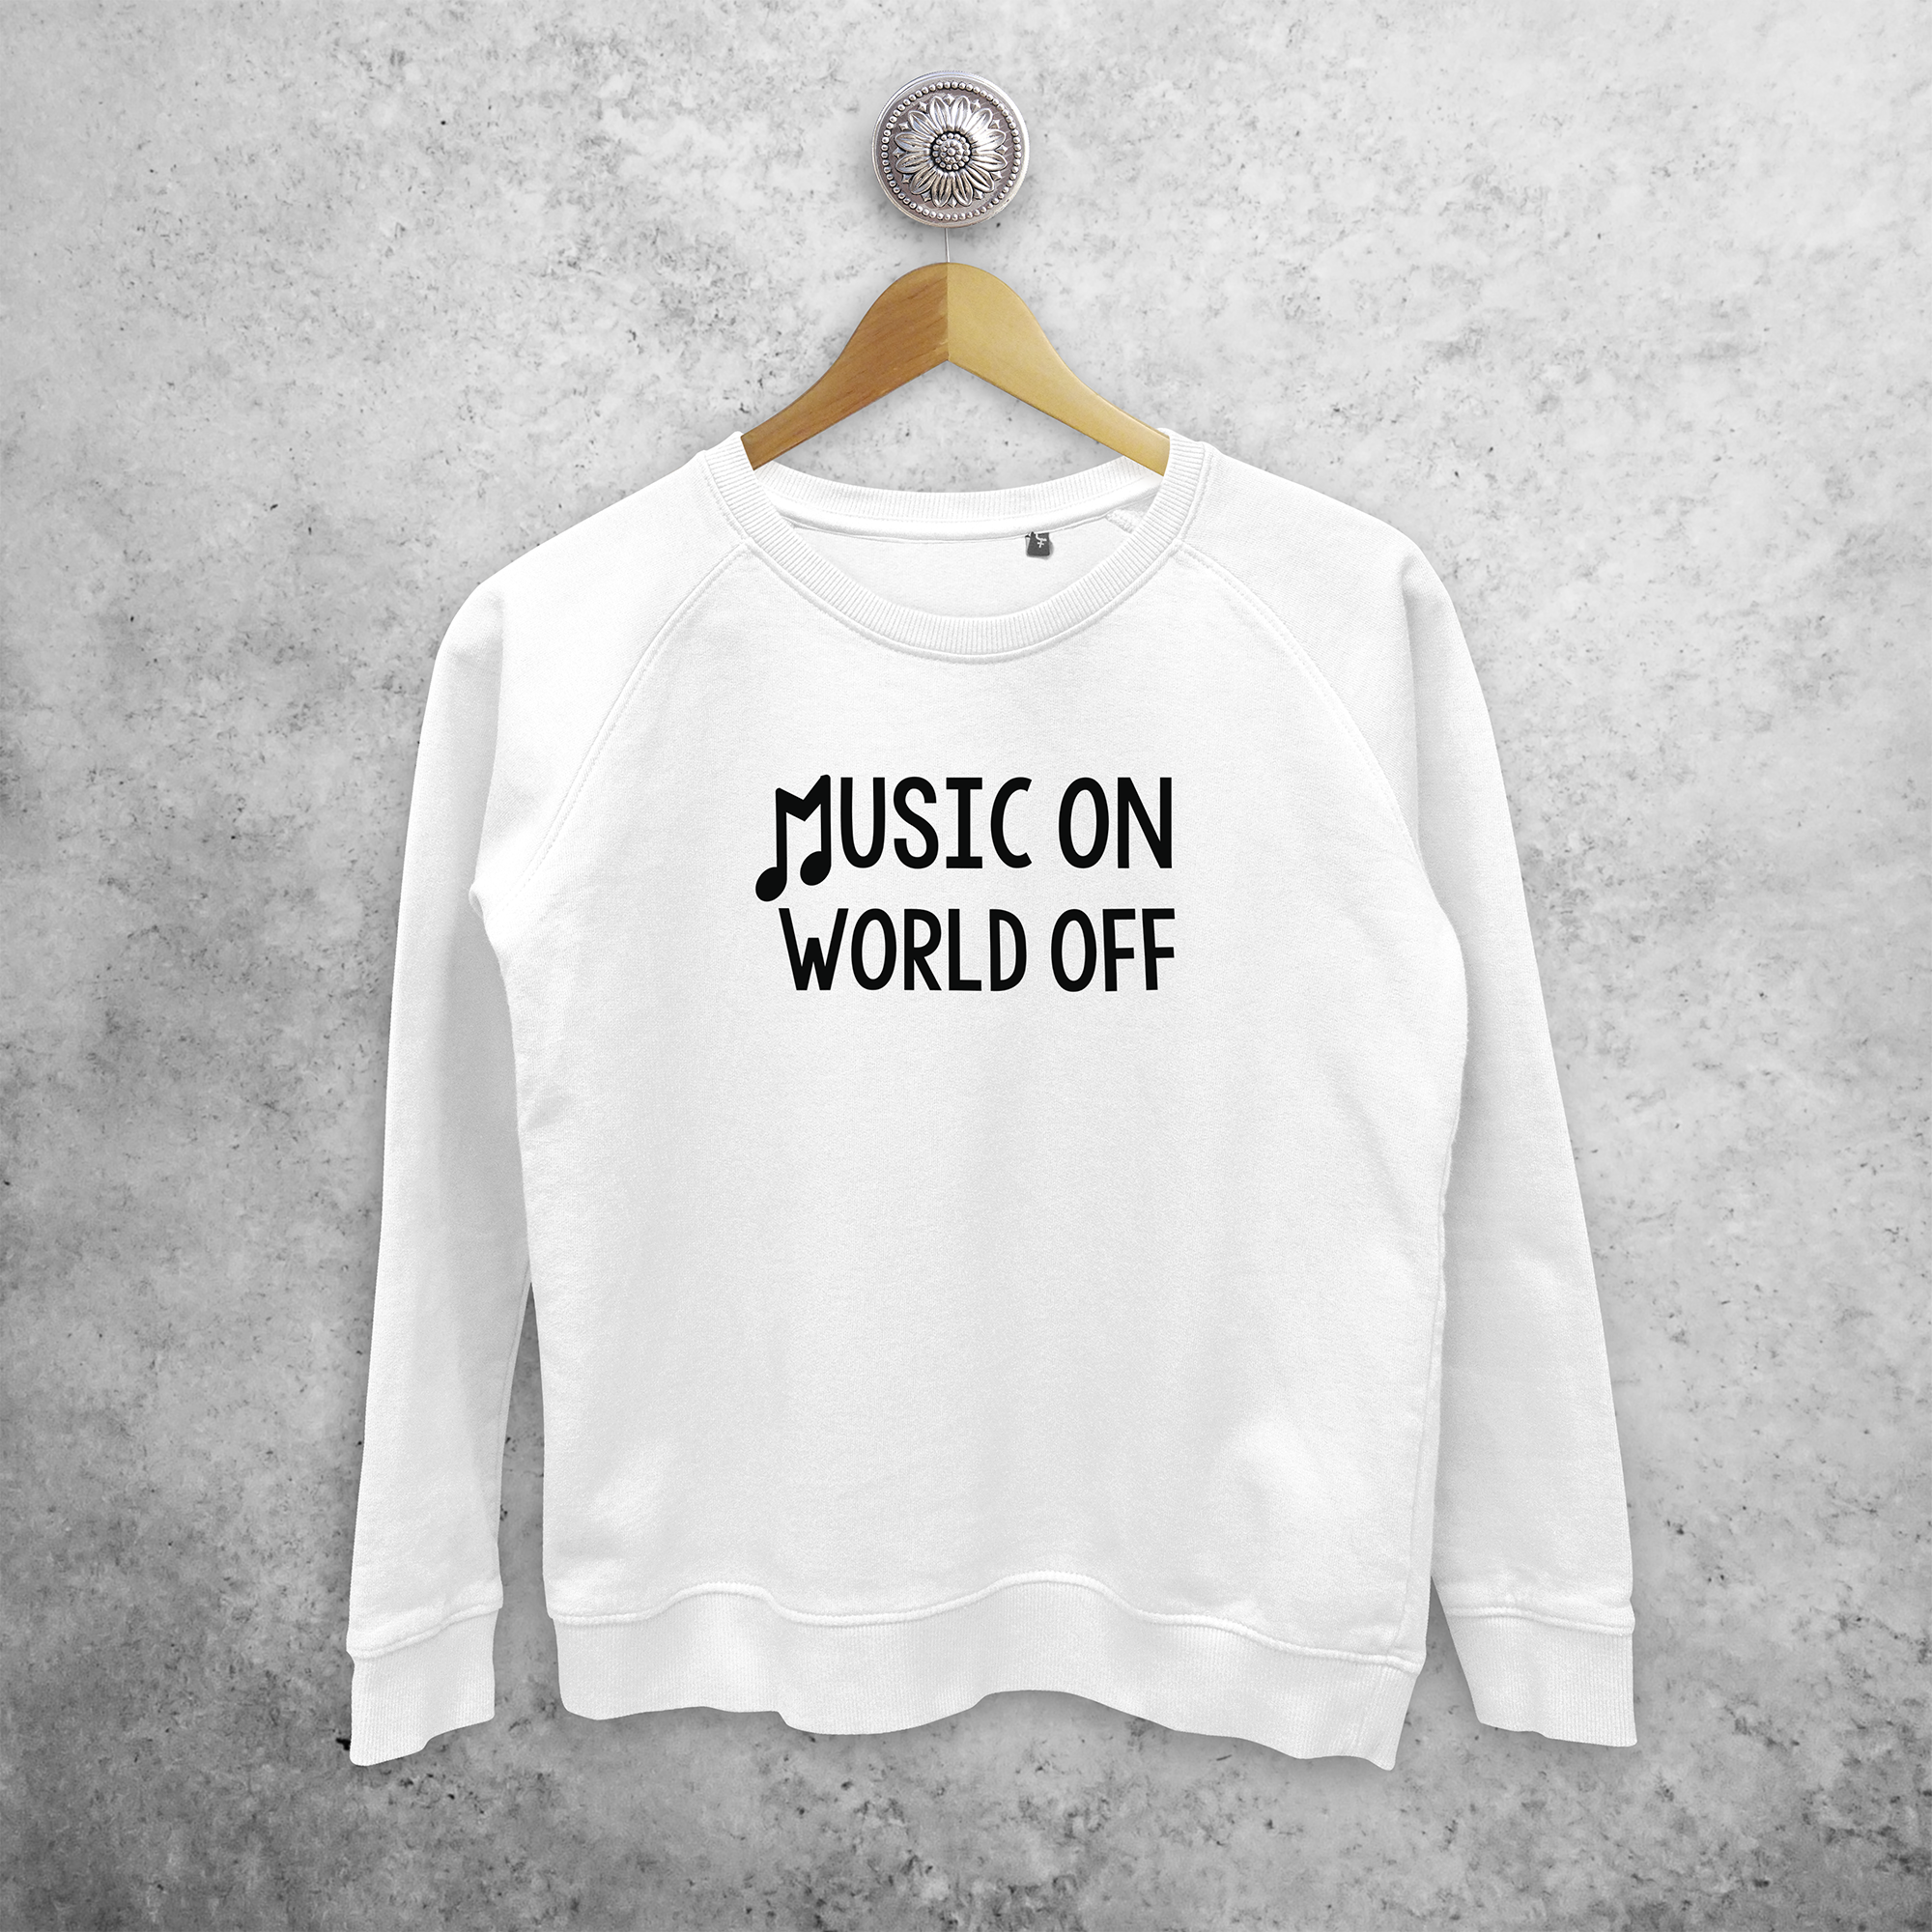 'Music on - World off' sweater